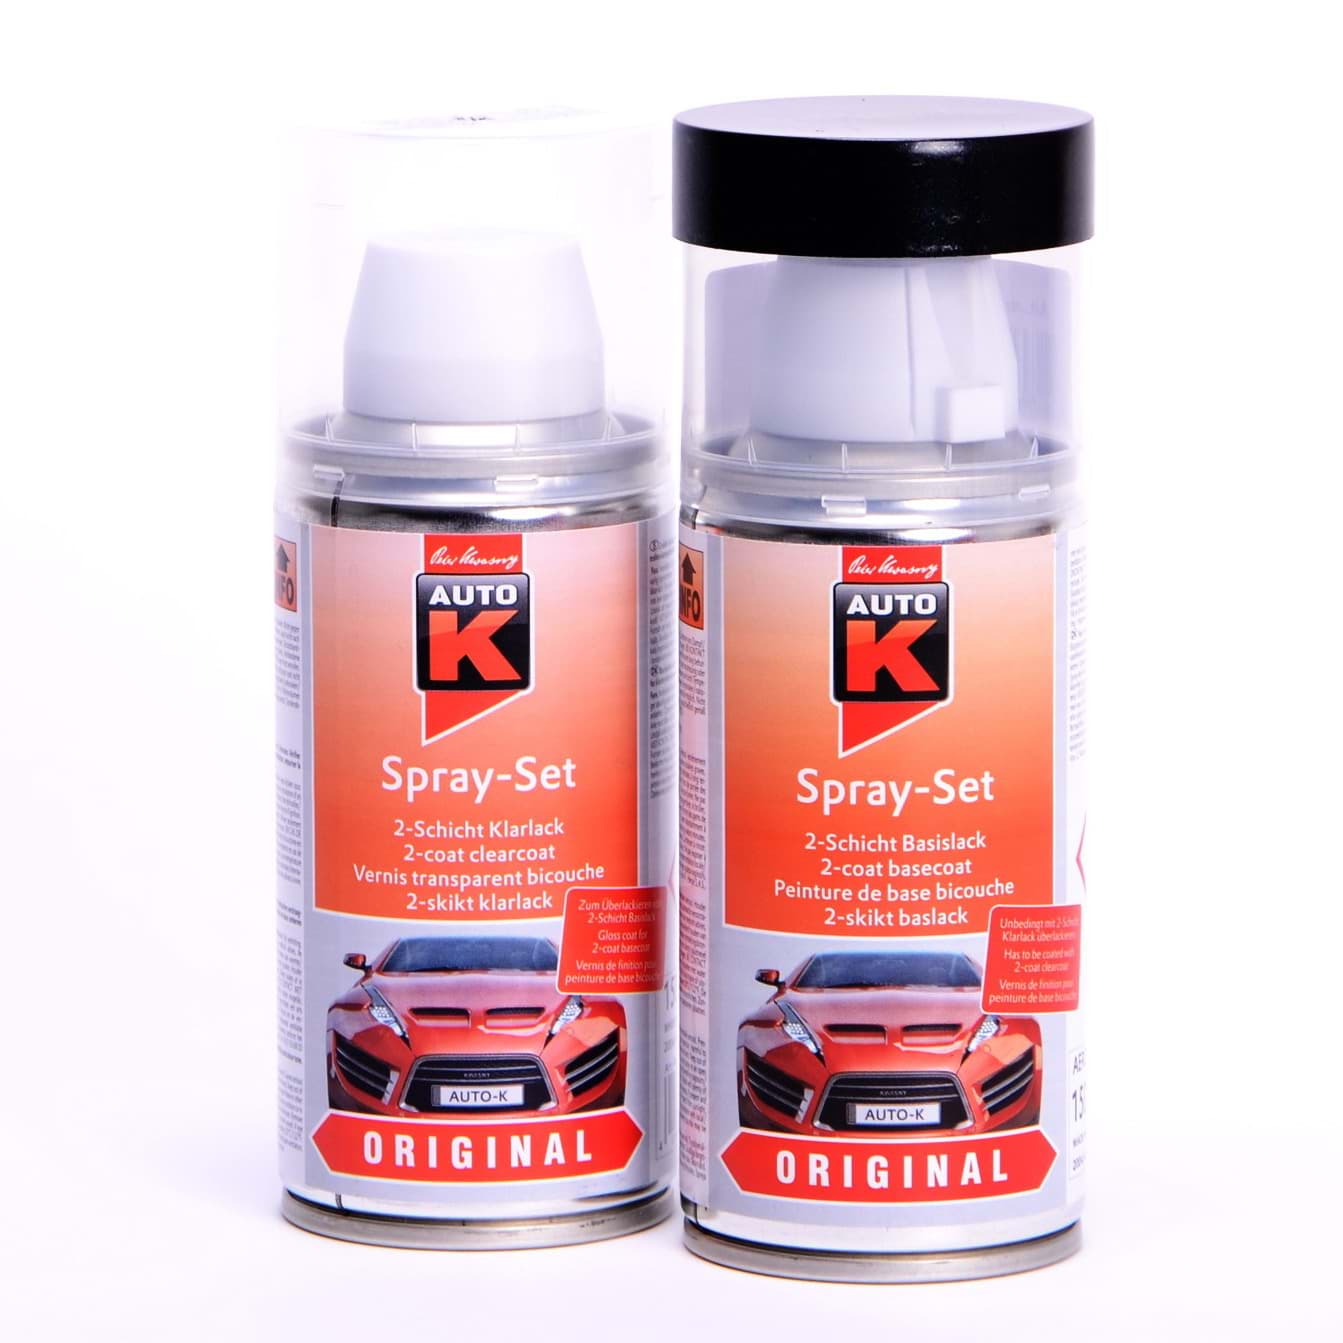 Auto-K Spray-Set Autolack für Opel 286 / 29U Keramikblau met 21399 resmi